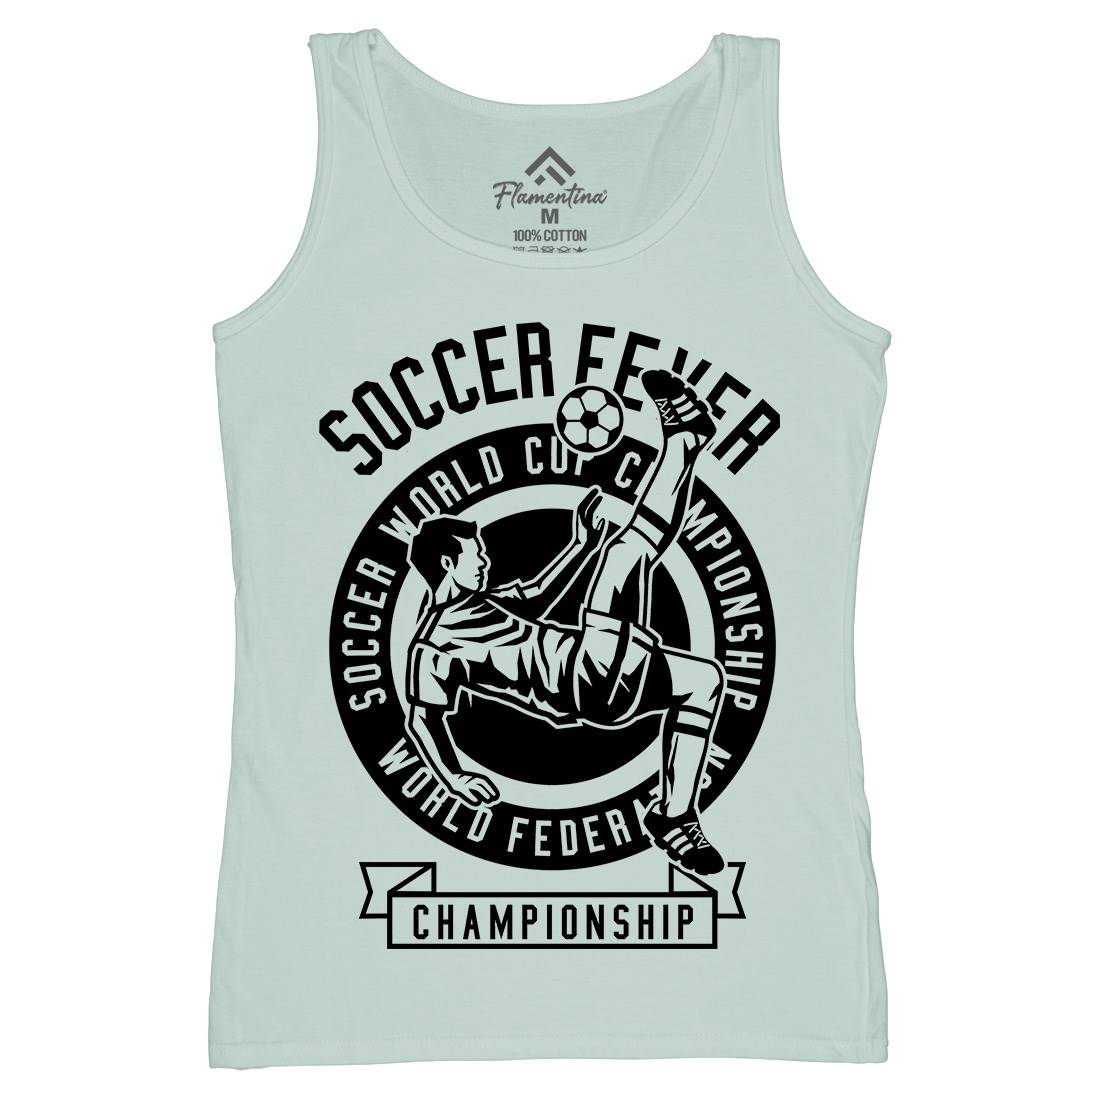 Soccer Fever Womens Organic Tank Top Vest Sport B634